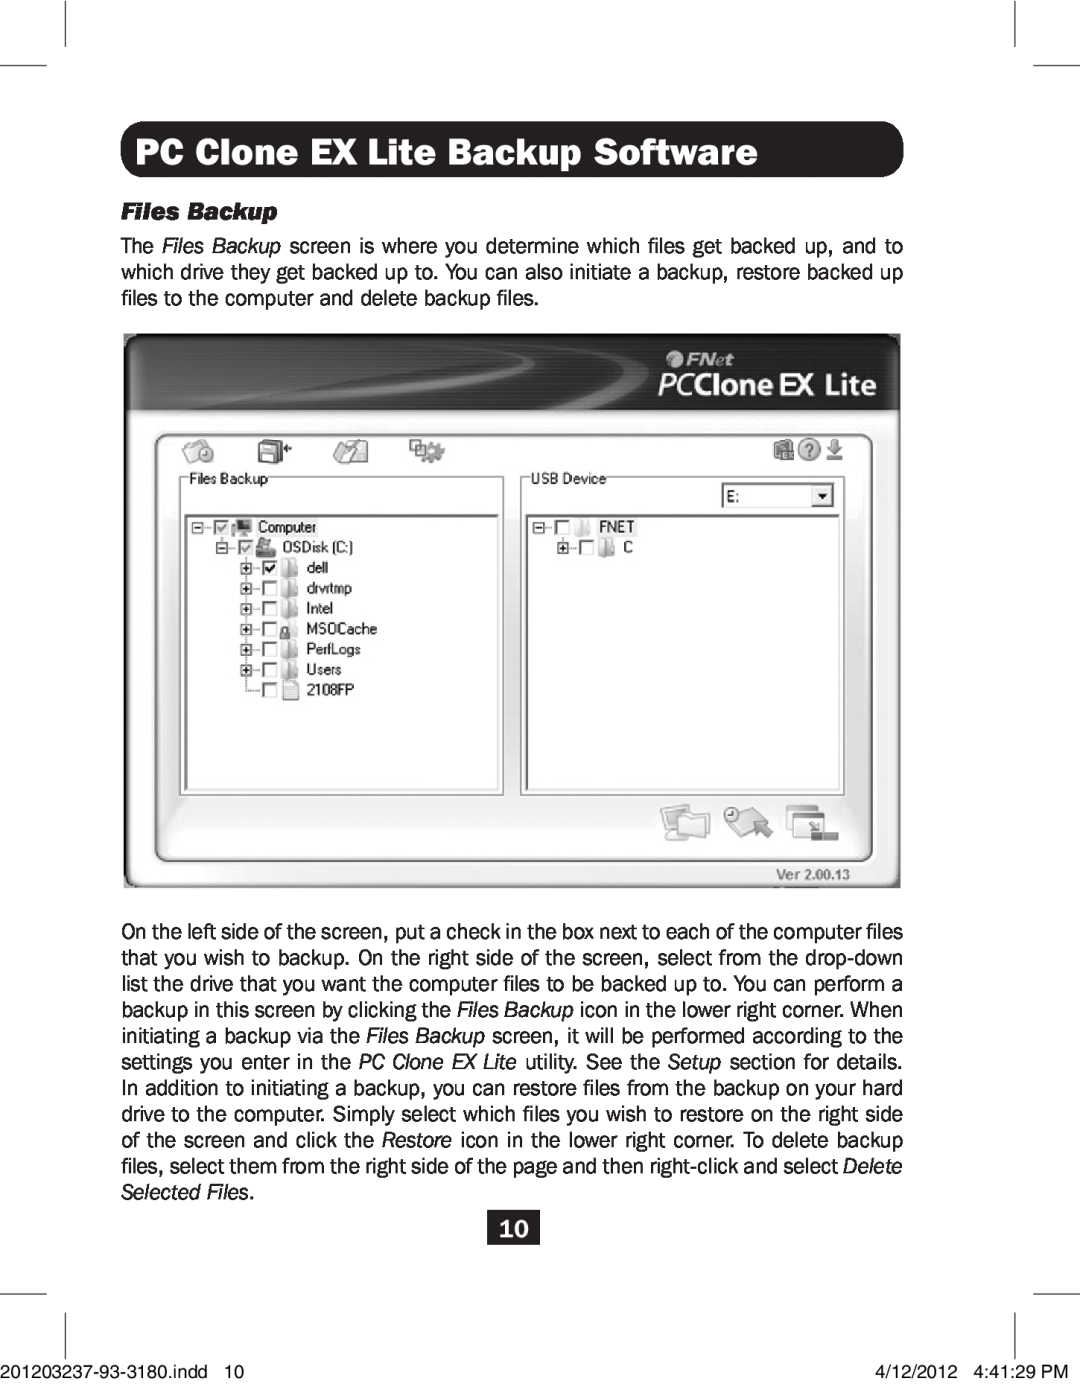 Tripp Lite U238-000-1 owner manual Files Backup, PC Clone EX Lite Backup Software 